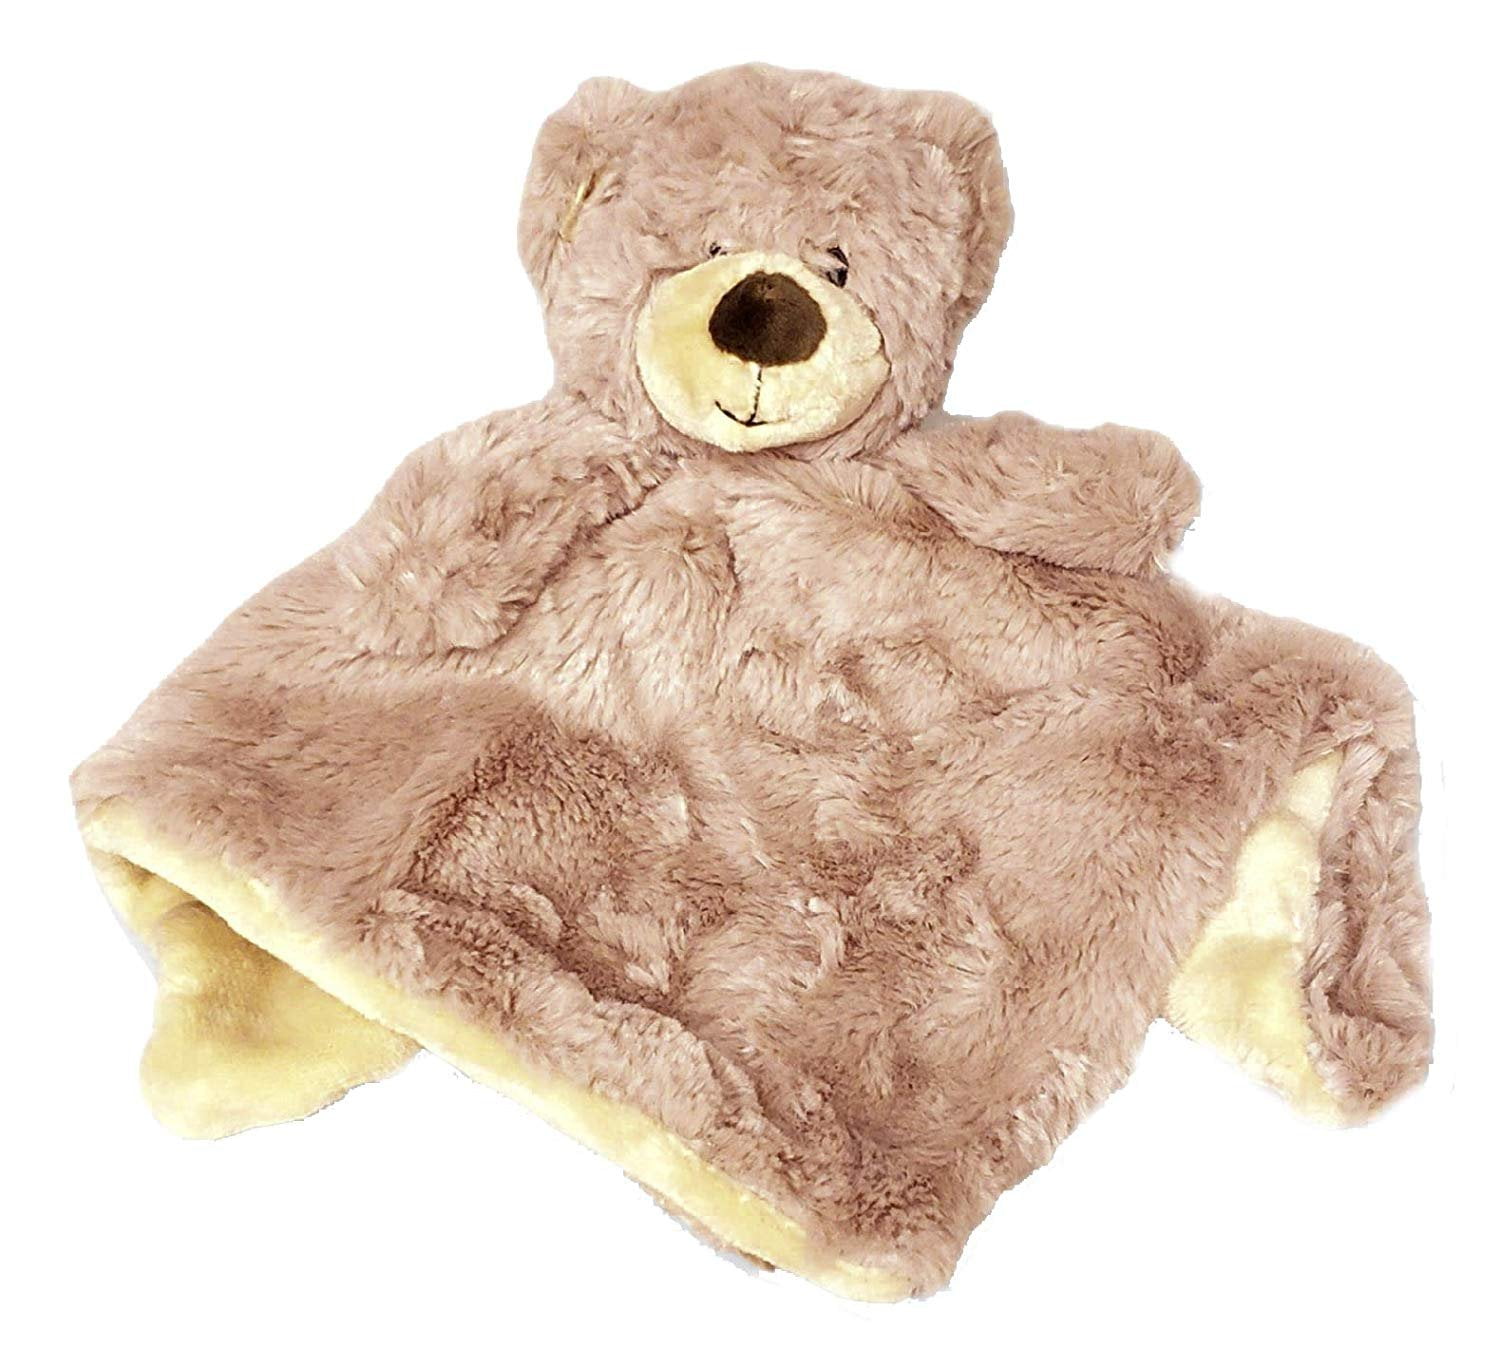 Apricot Lamb Luxury Snuggle Plush Teddy Bear Infant Stuffed Animals Security Blanket Nursery Character Blanket Yellow Teddy Bear, 14 Inches